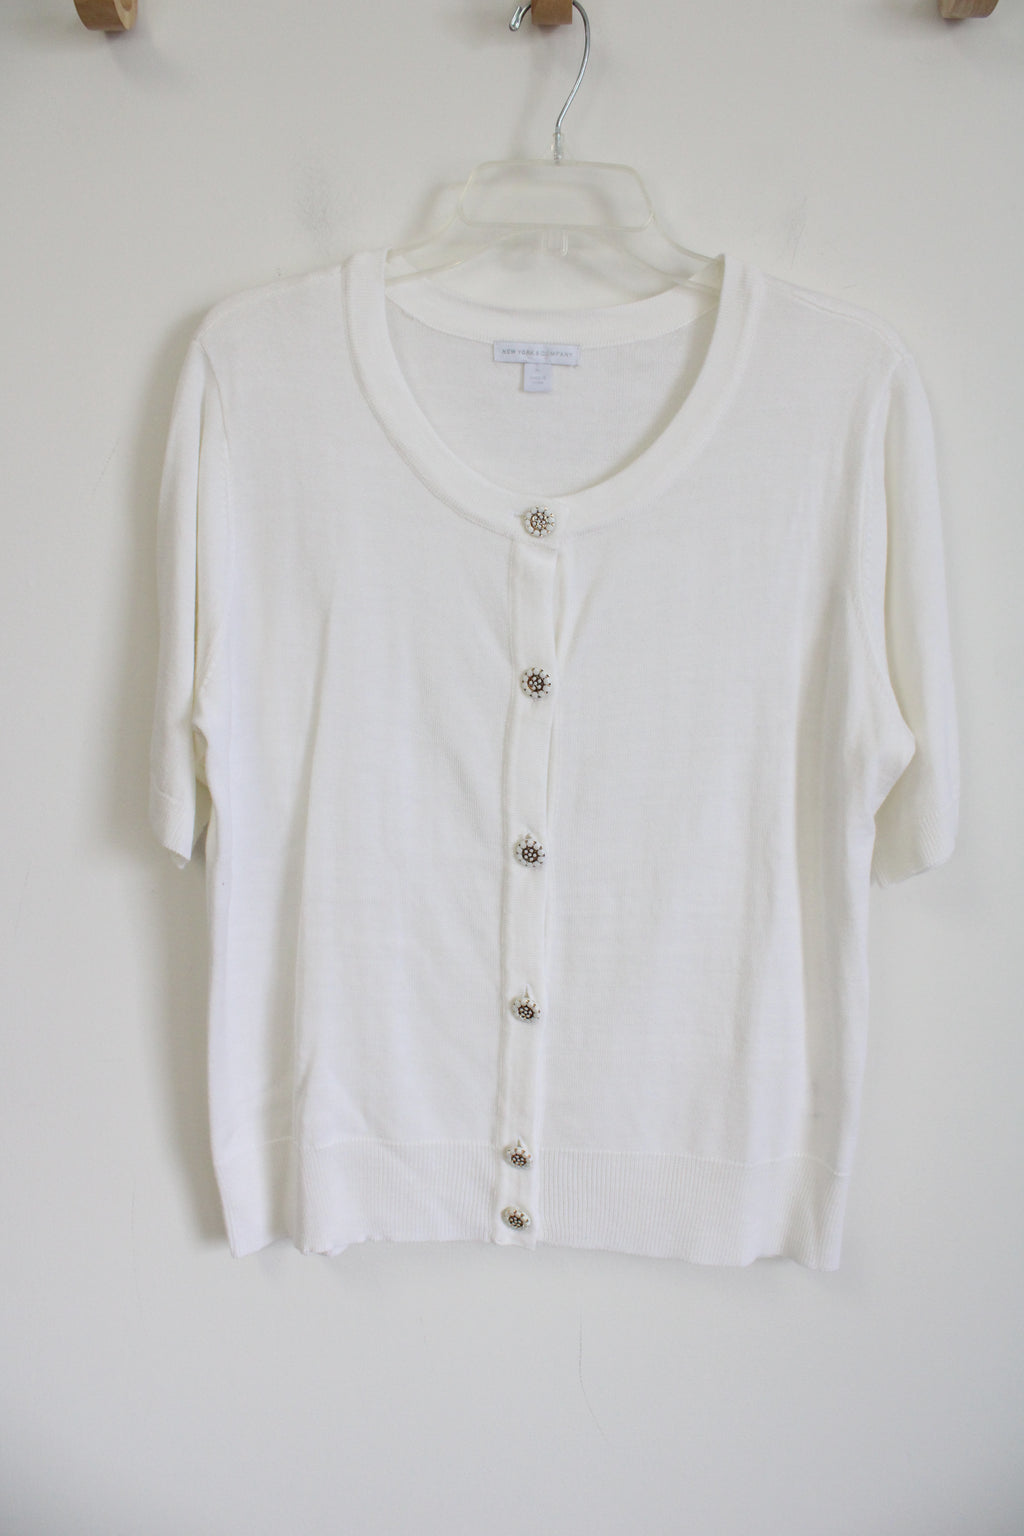 New York & Co. White Knit Cardigan | XL